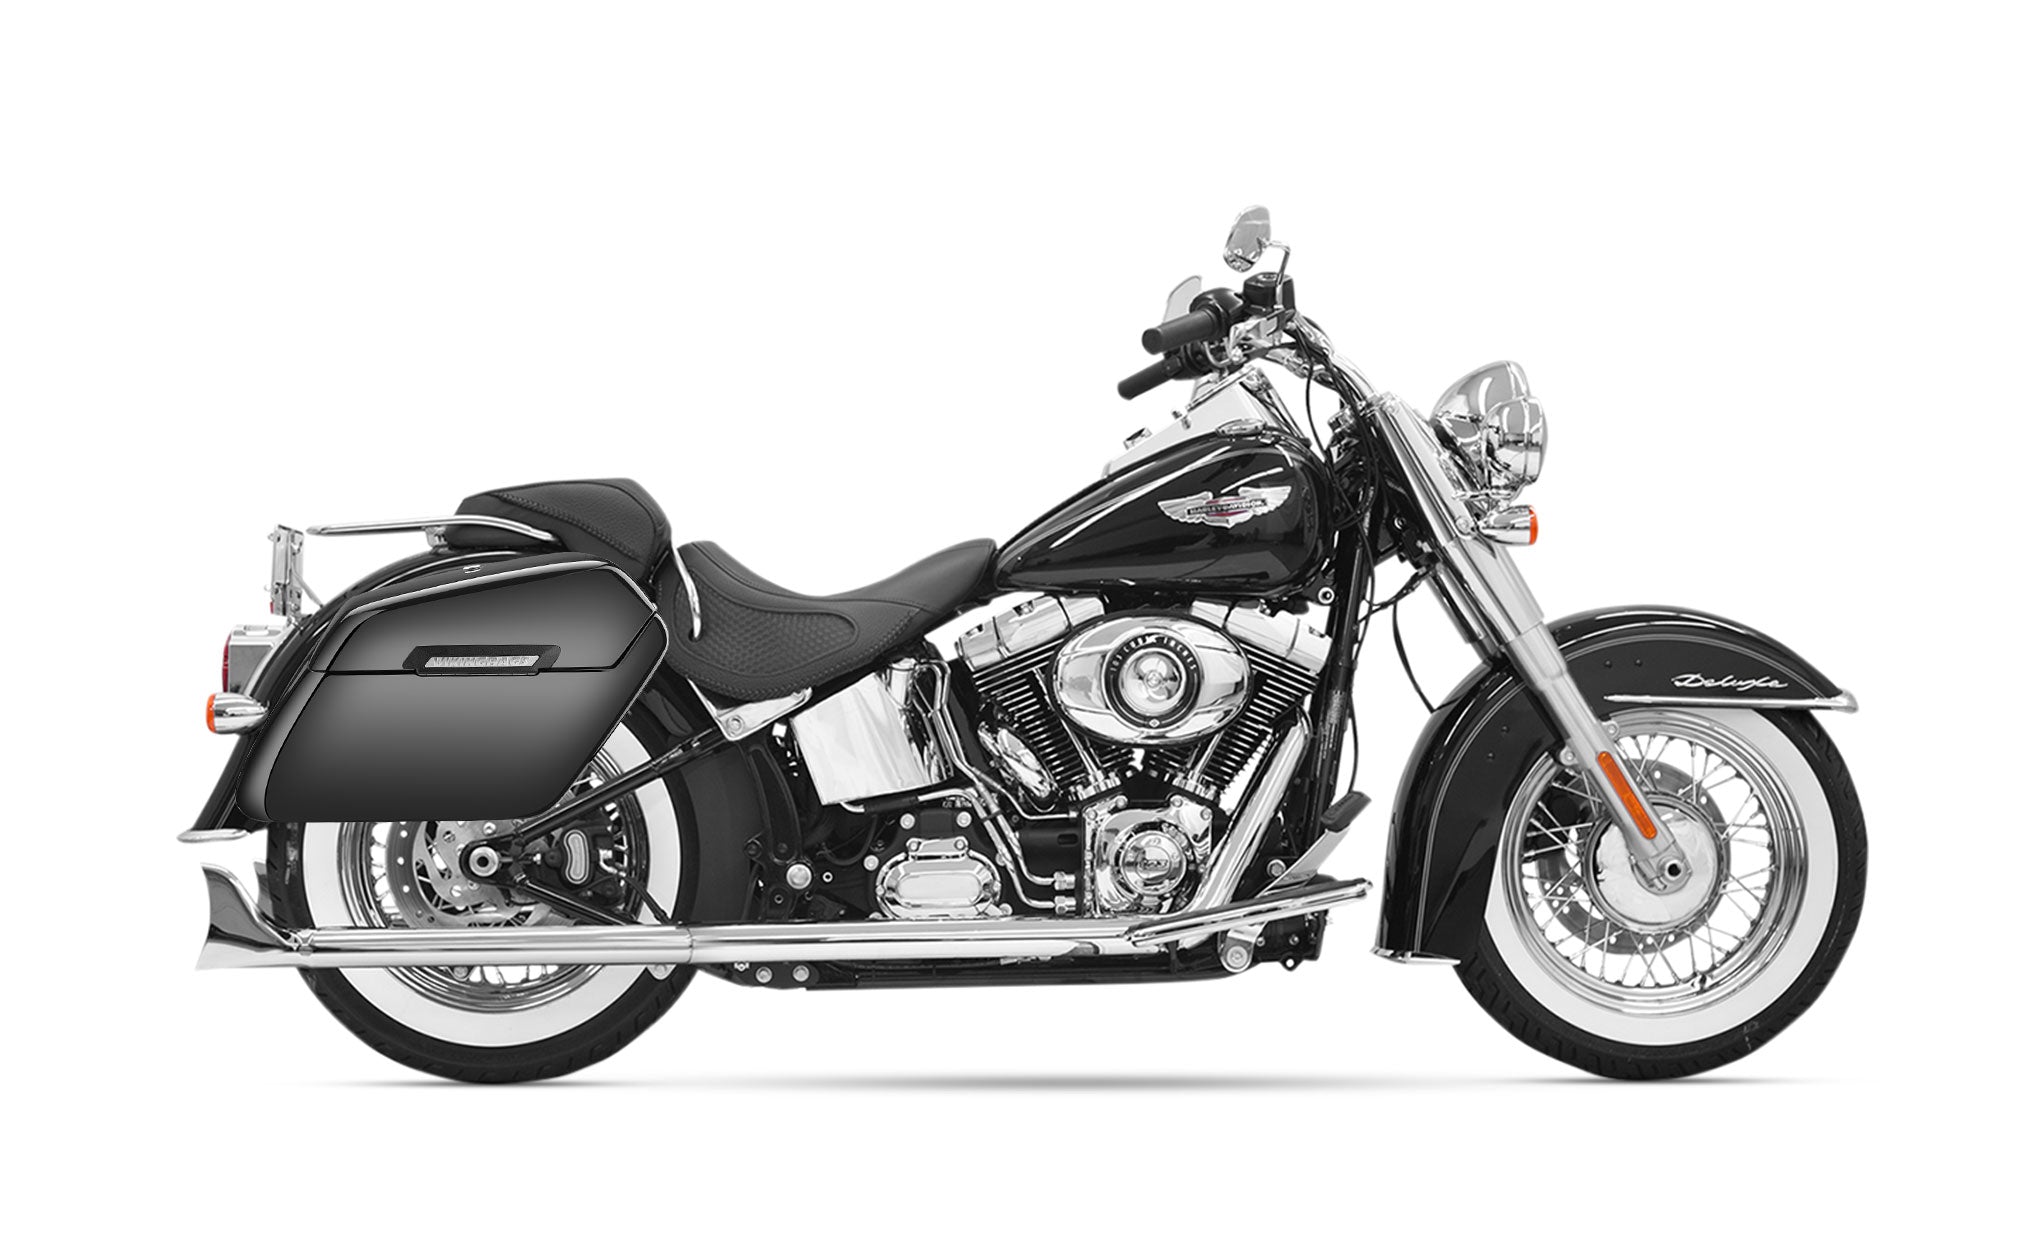 42L - Baldur Extra Large Painted Motorcycle Hard Saddlebags for Harley Softail Heritage FLSTICCI on Bike Photo @expand